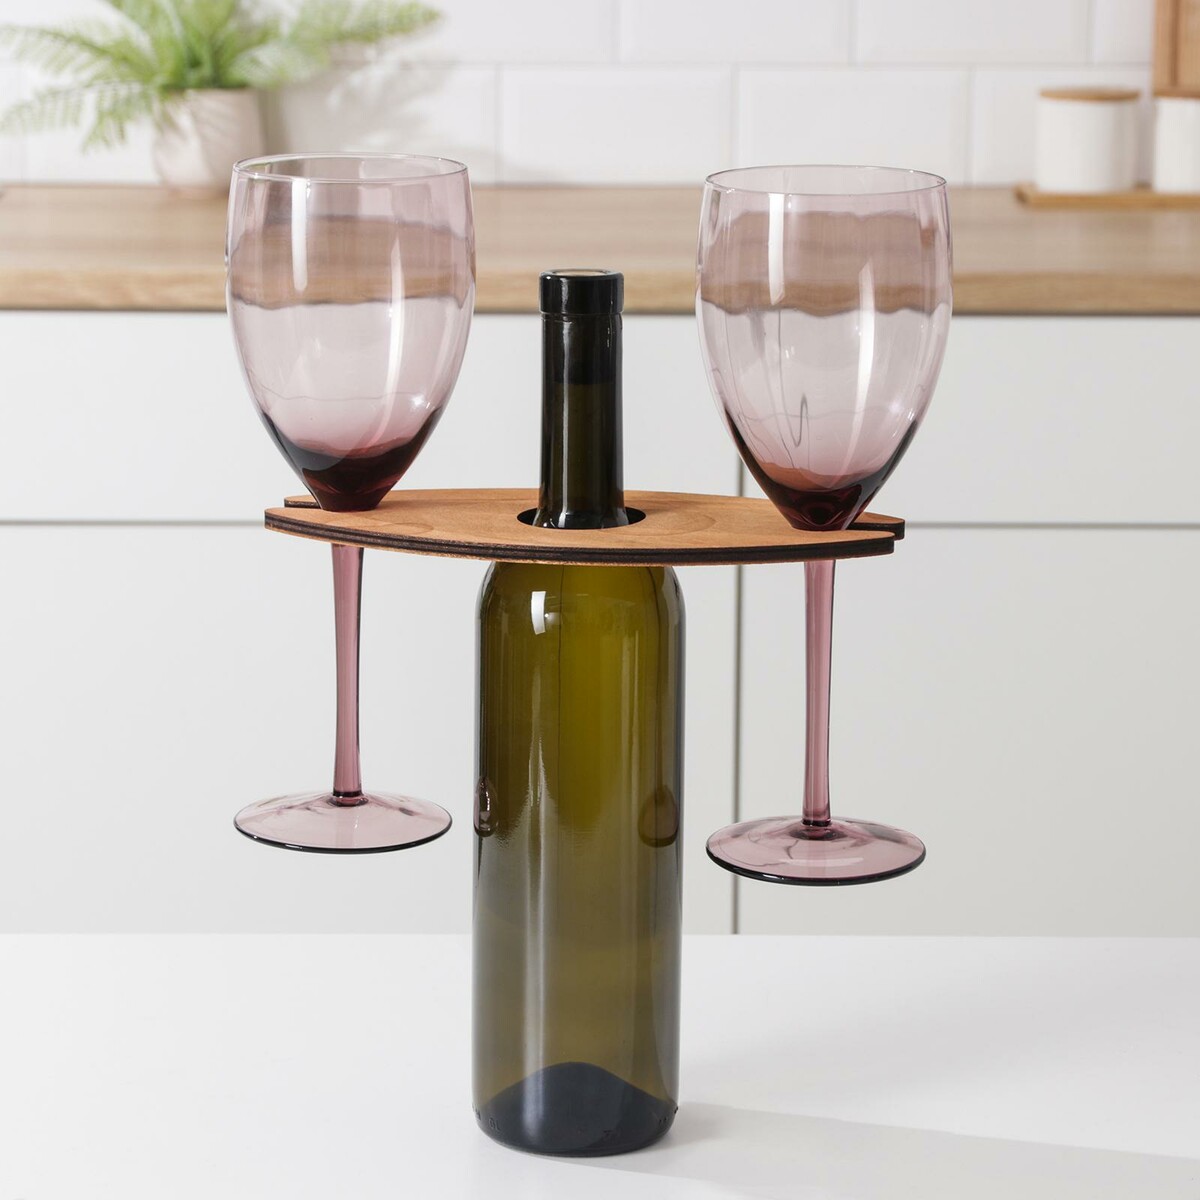 Подставка для вина и двух бокалов, 10×22×1 см подставка для вина и бокалов